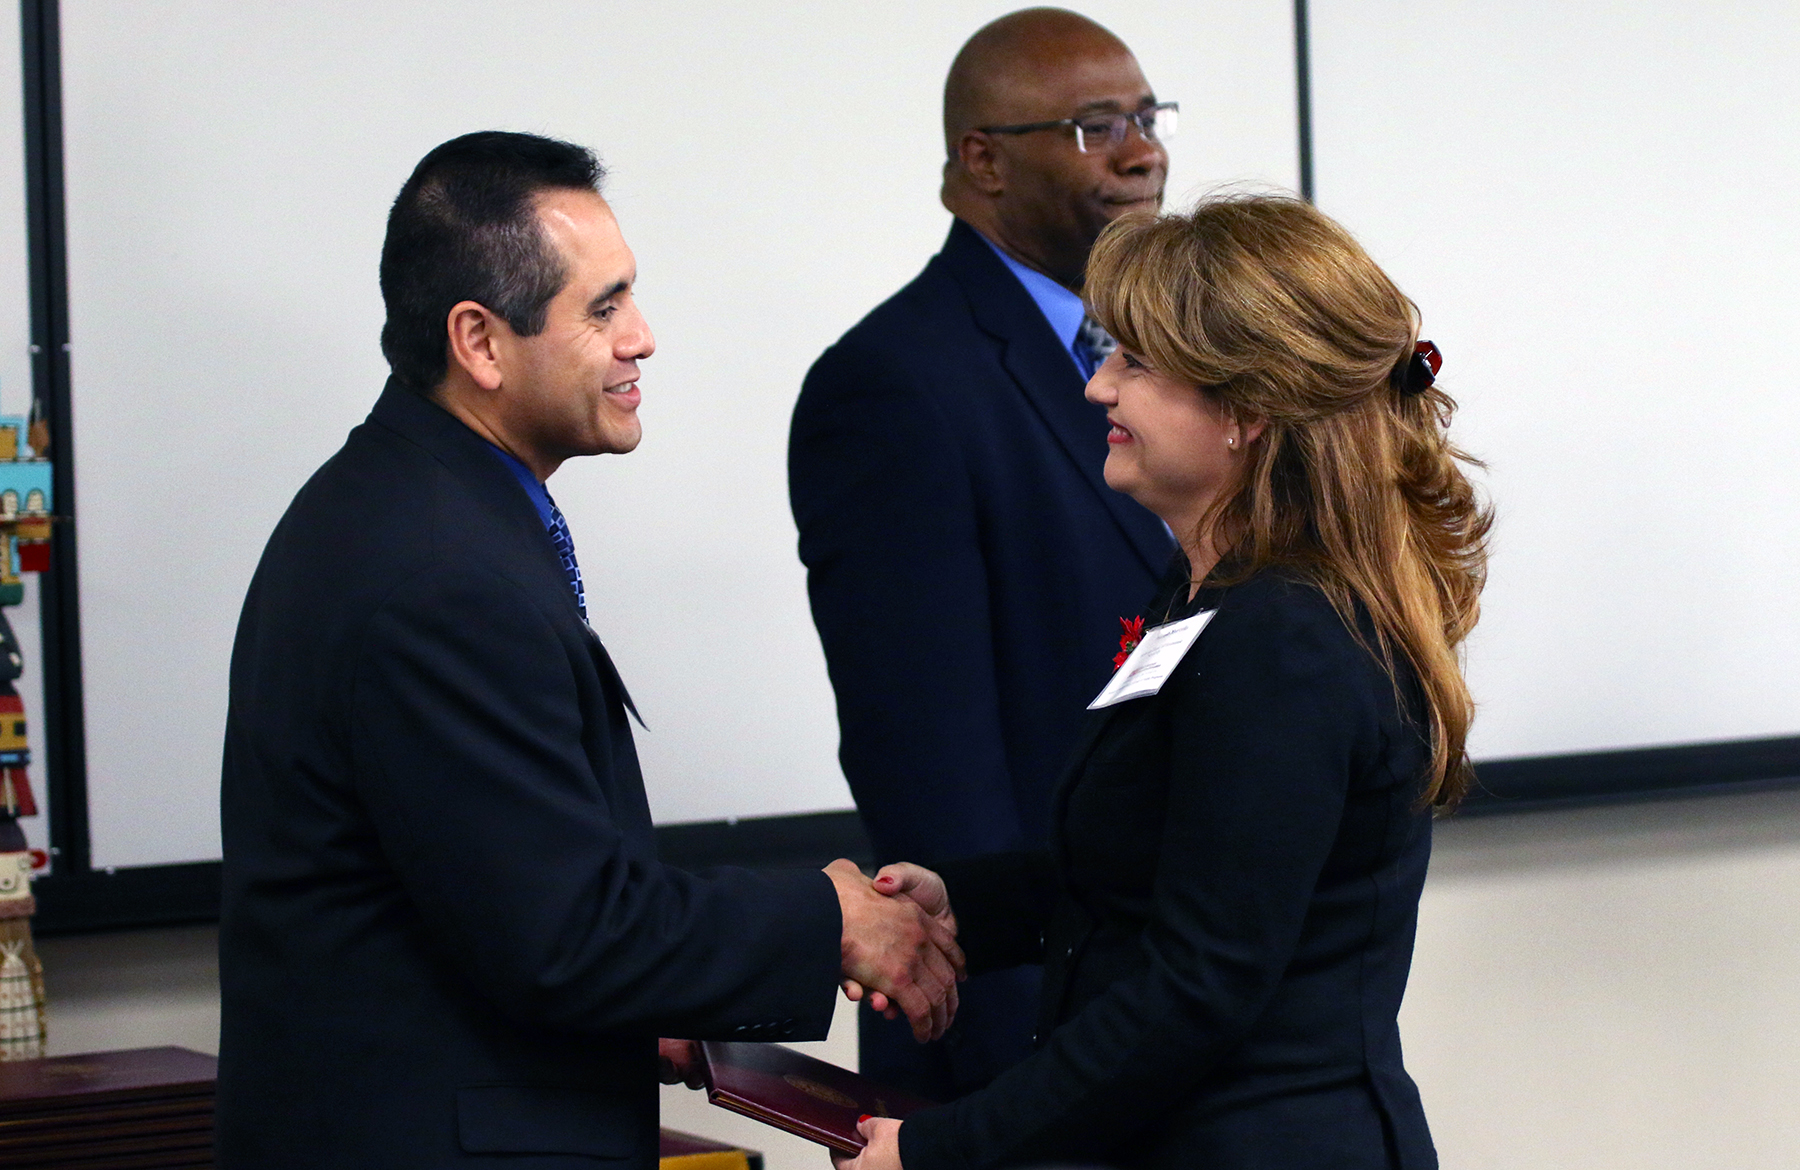 Hector Zelaya congratulates a graduate of the Bob Ramsey Executive Education program at Arizona State University.